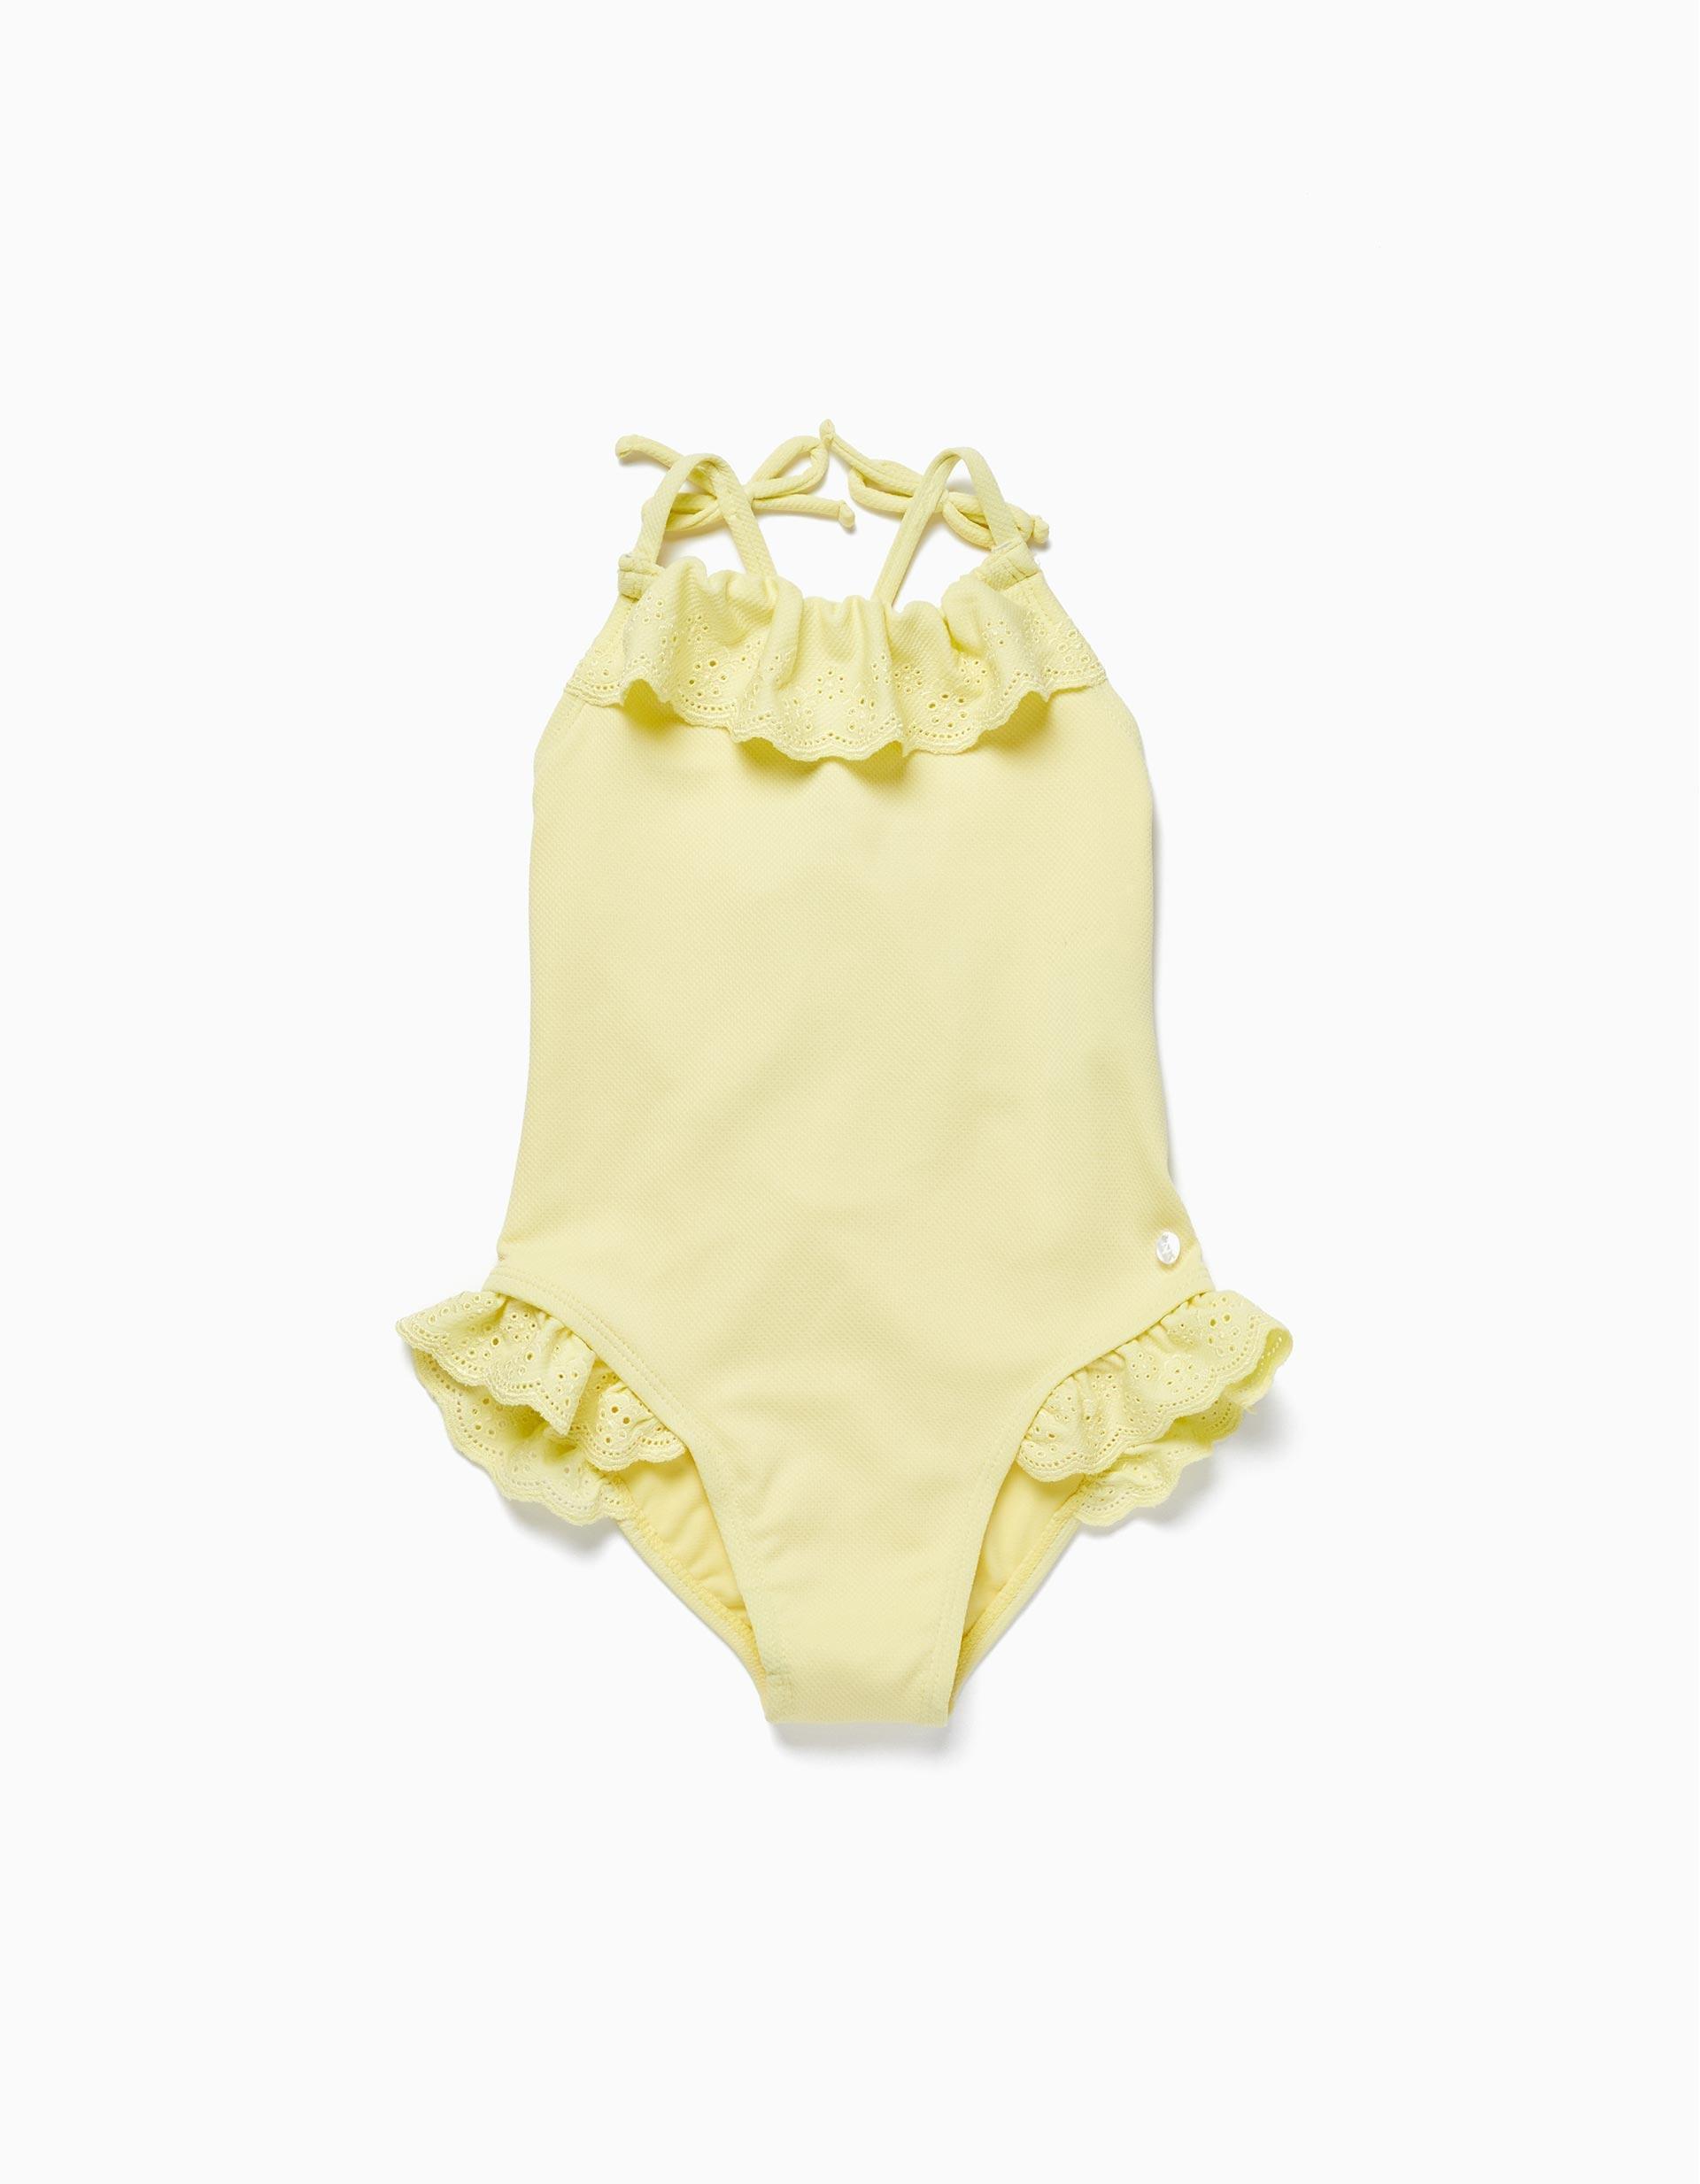 Zippy - Yellow Embroidered Swimsuit, Kids Girls